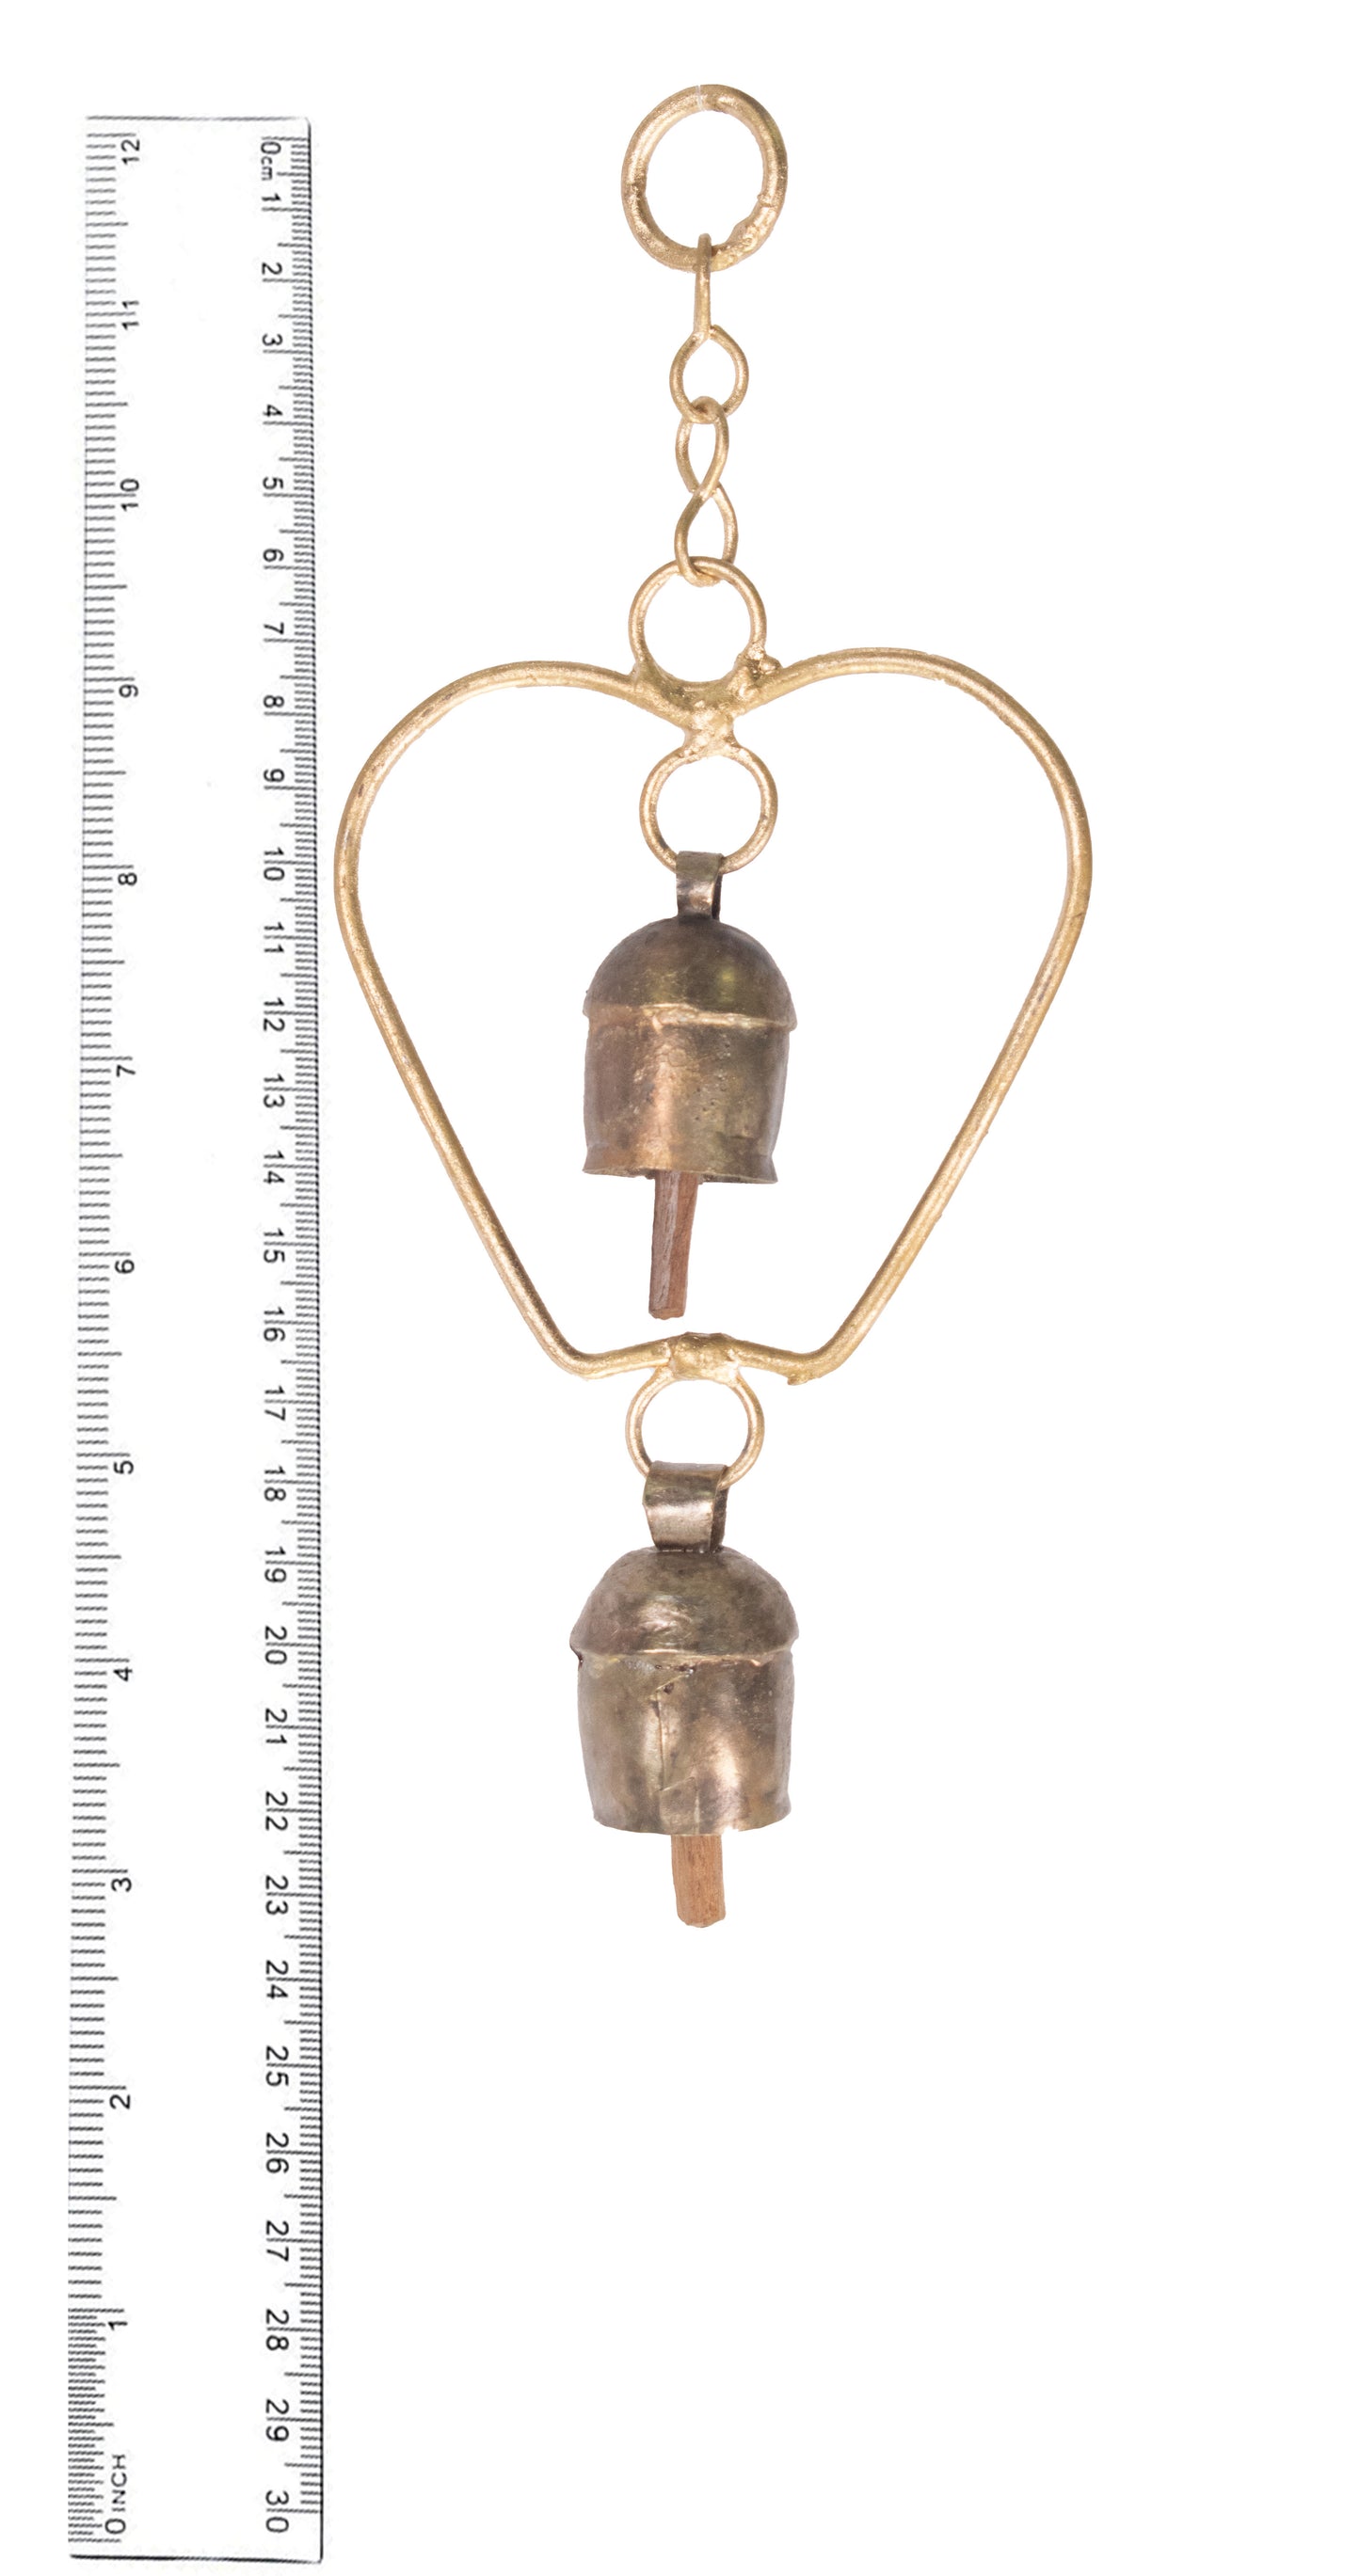 Hand Made Metal Bells Wrought Iron Copper-Zinc Coated Home Décor Chimes Cow Bell   - Apple Plain - 2 Bells  -  SKU: 0078